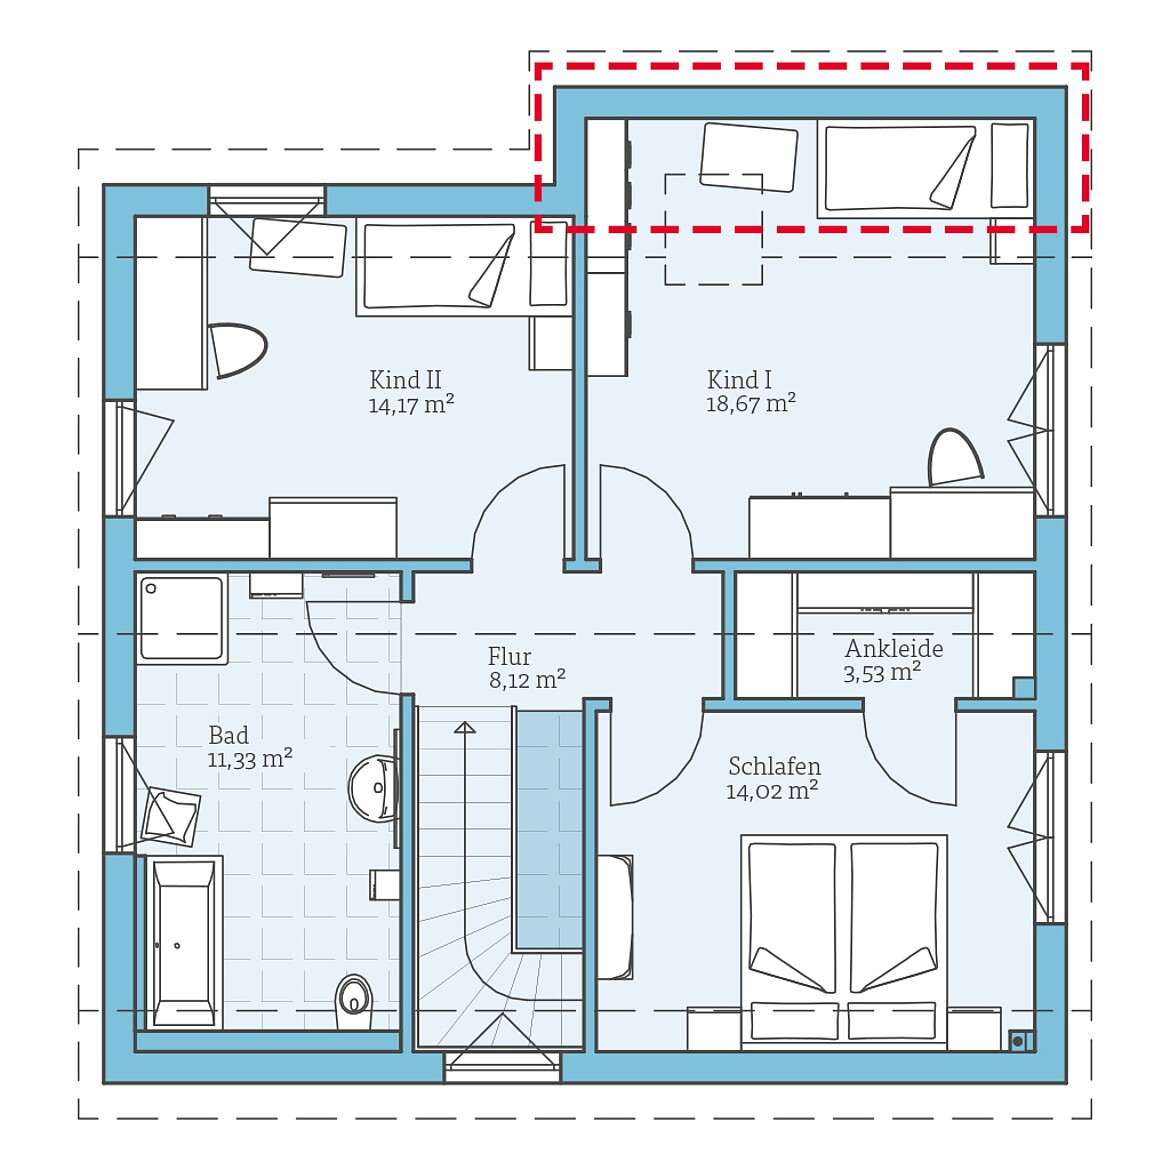 Prefabricated house Variant 25-135: Top floor plan option